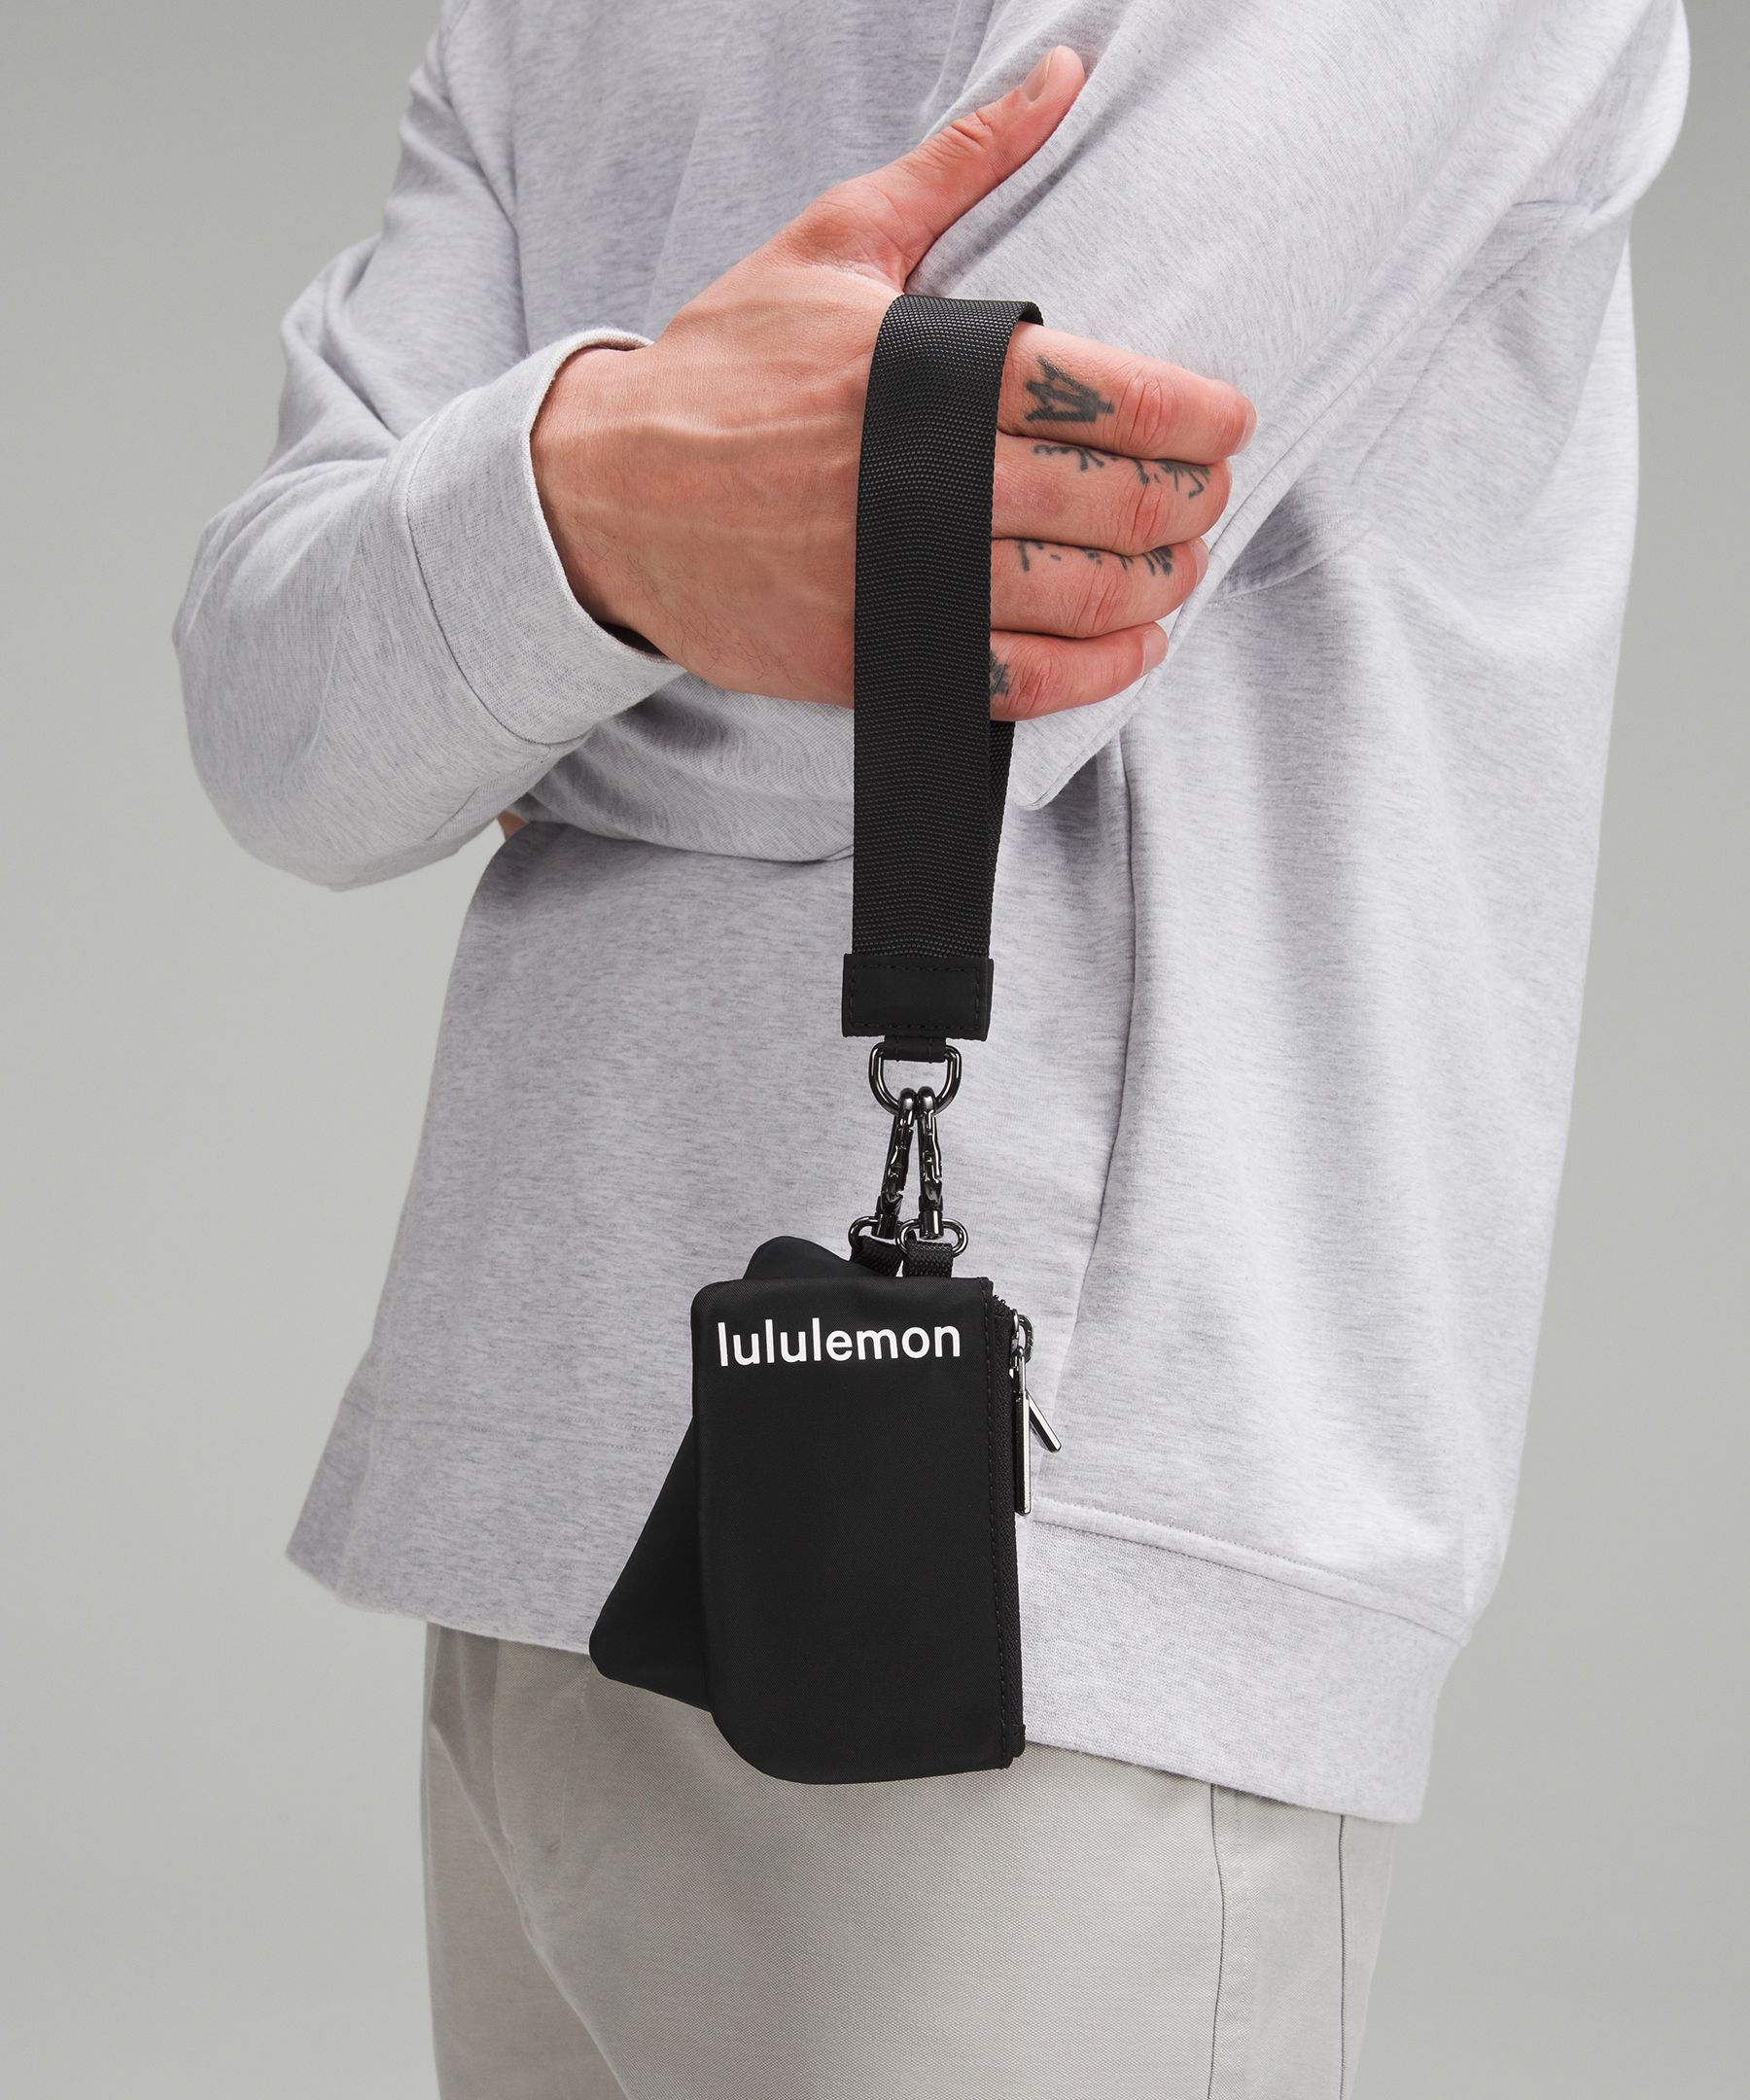 louis vuitton key pouch with lululemon wristlet｜TikTok Search